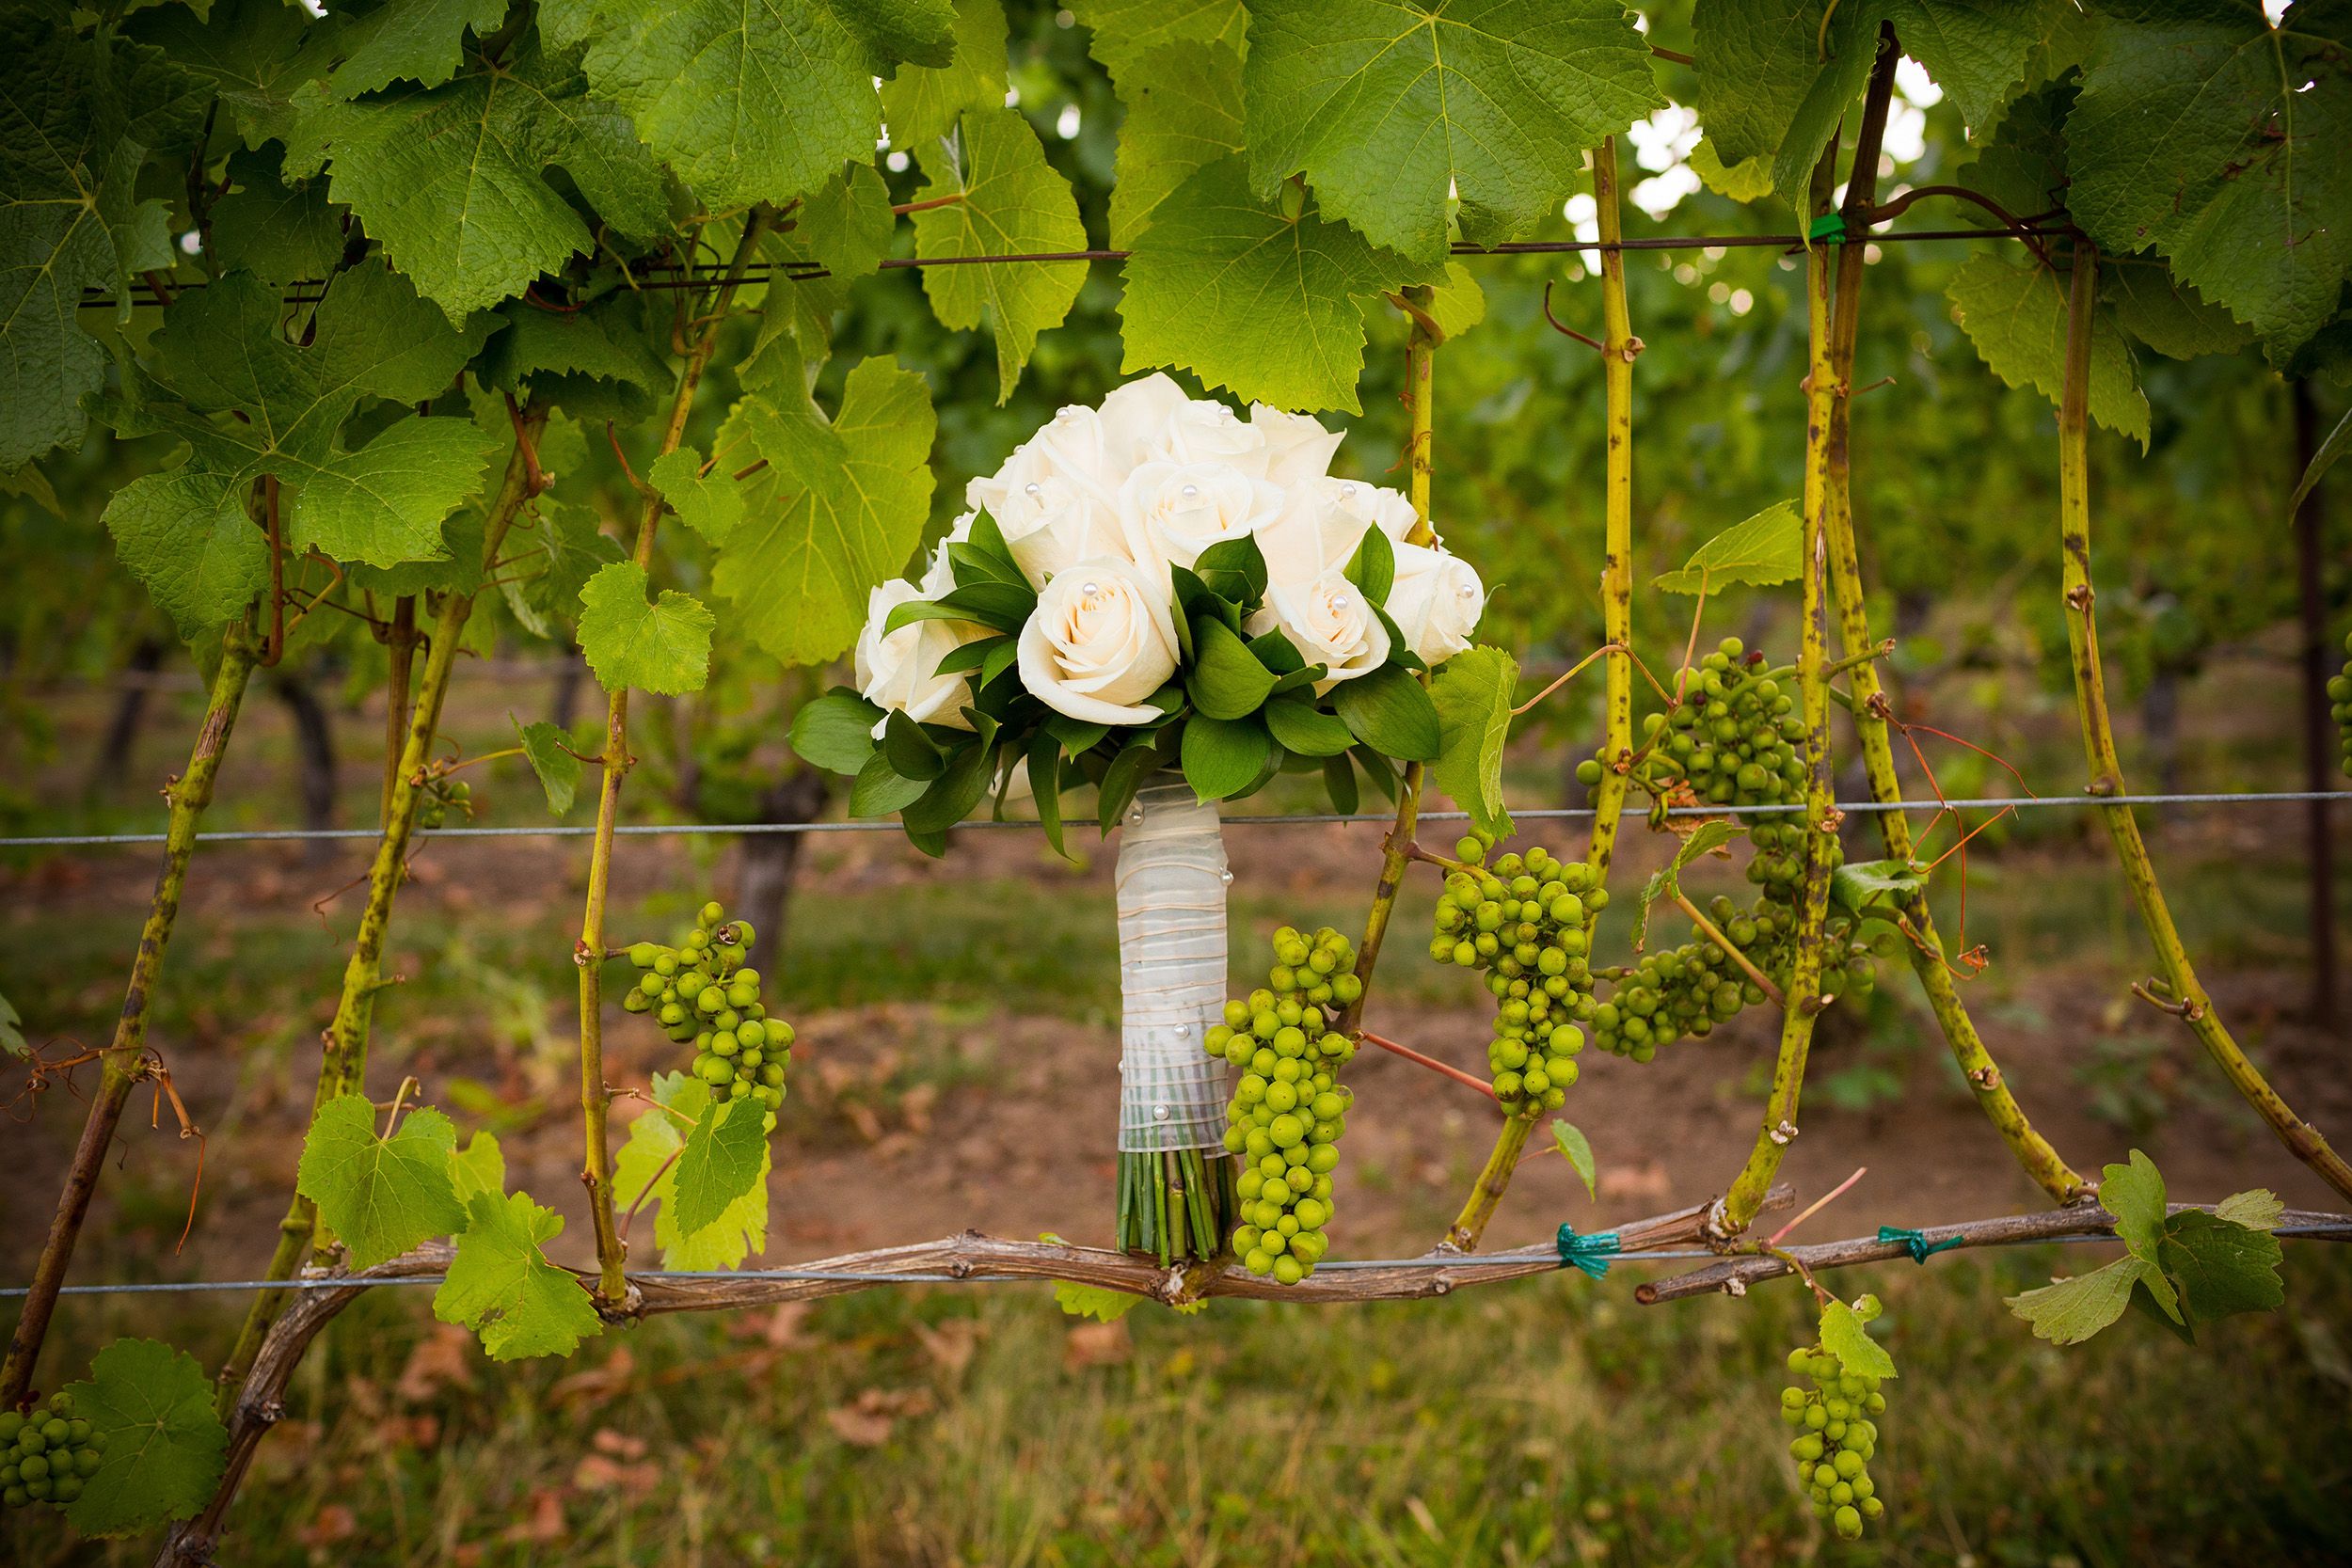 Mixed bouquet in a vineyard (Corney & Barrow/PA)